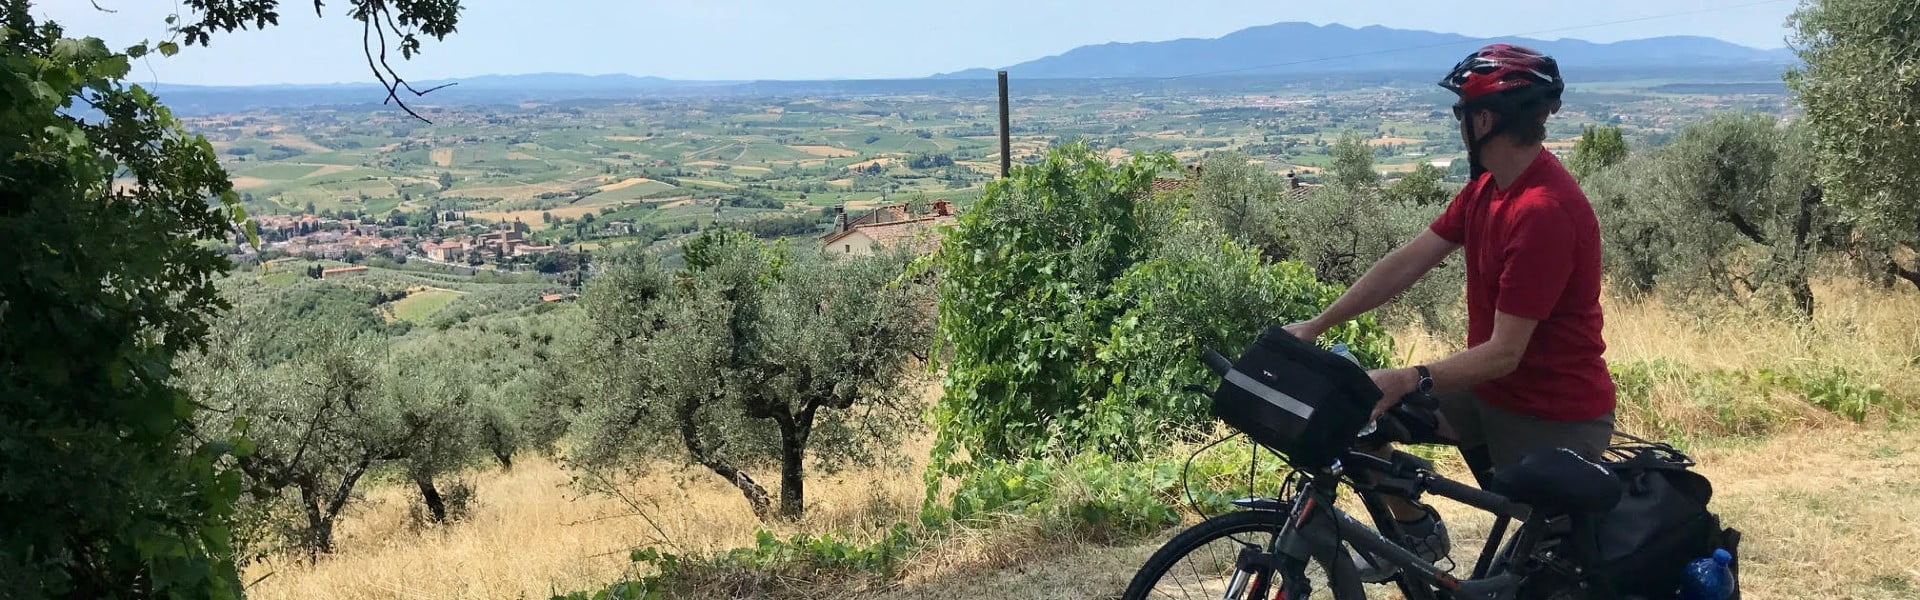 Tuscany Cycle Tour near Vinci